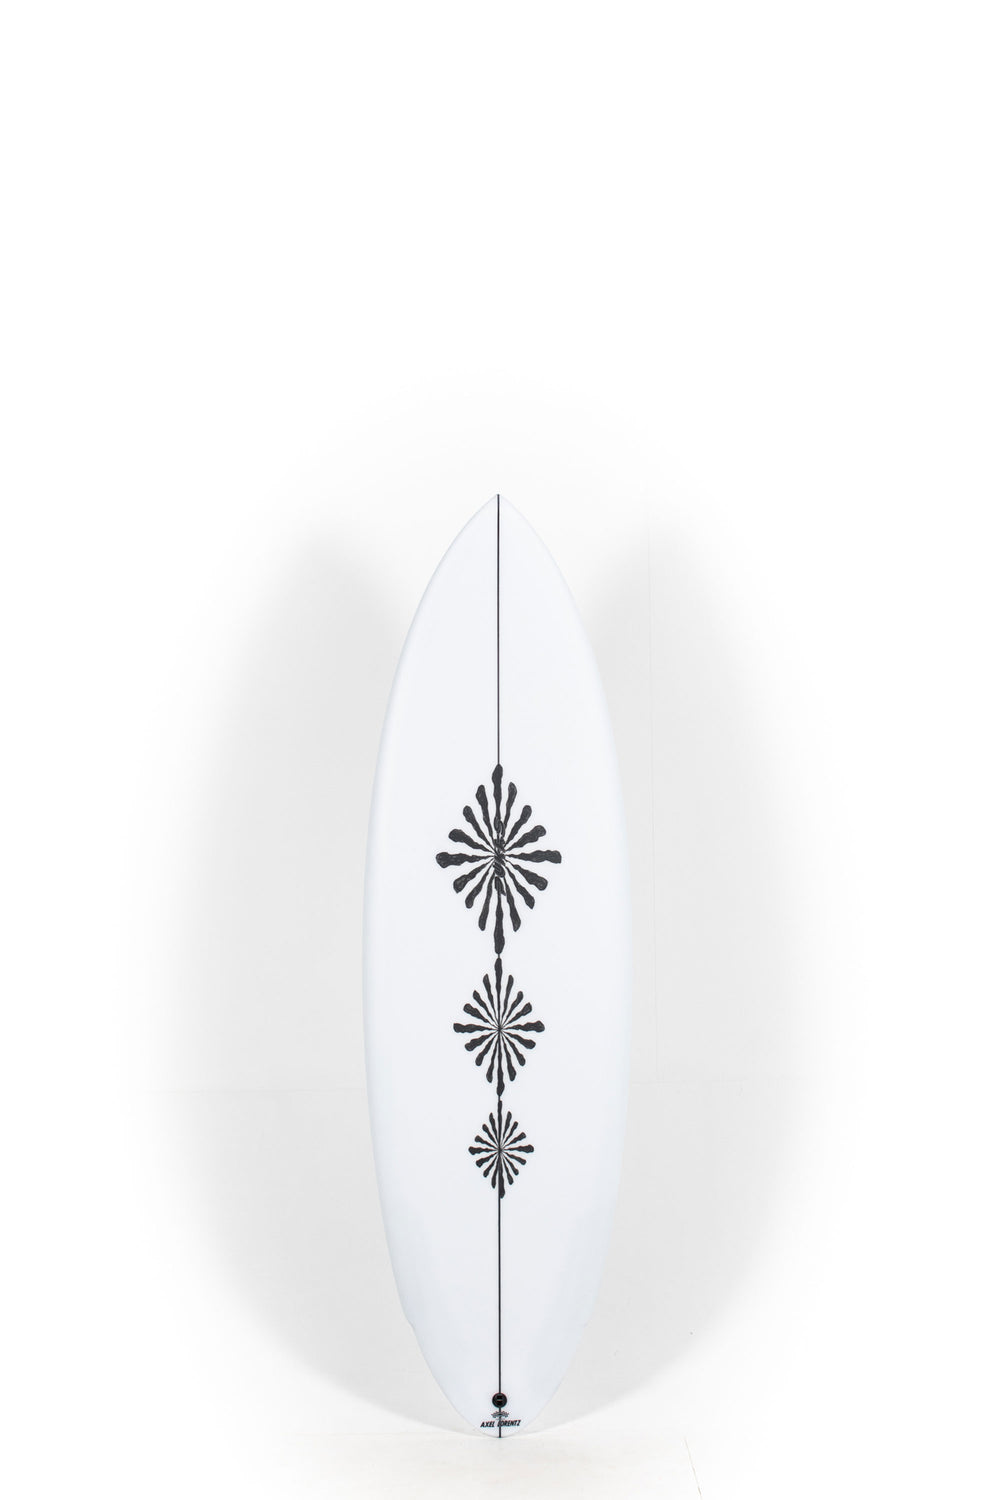 Pukas Surf shop - Pukas Surfboards - ACID PLAN by Axel Lorentz -  5'8